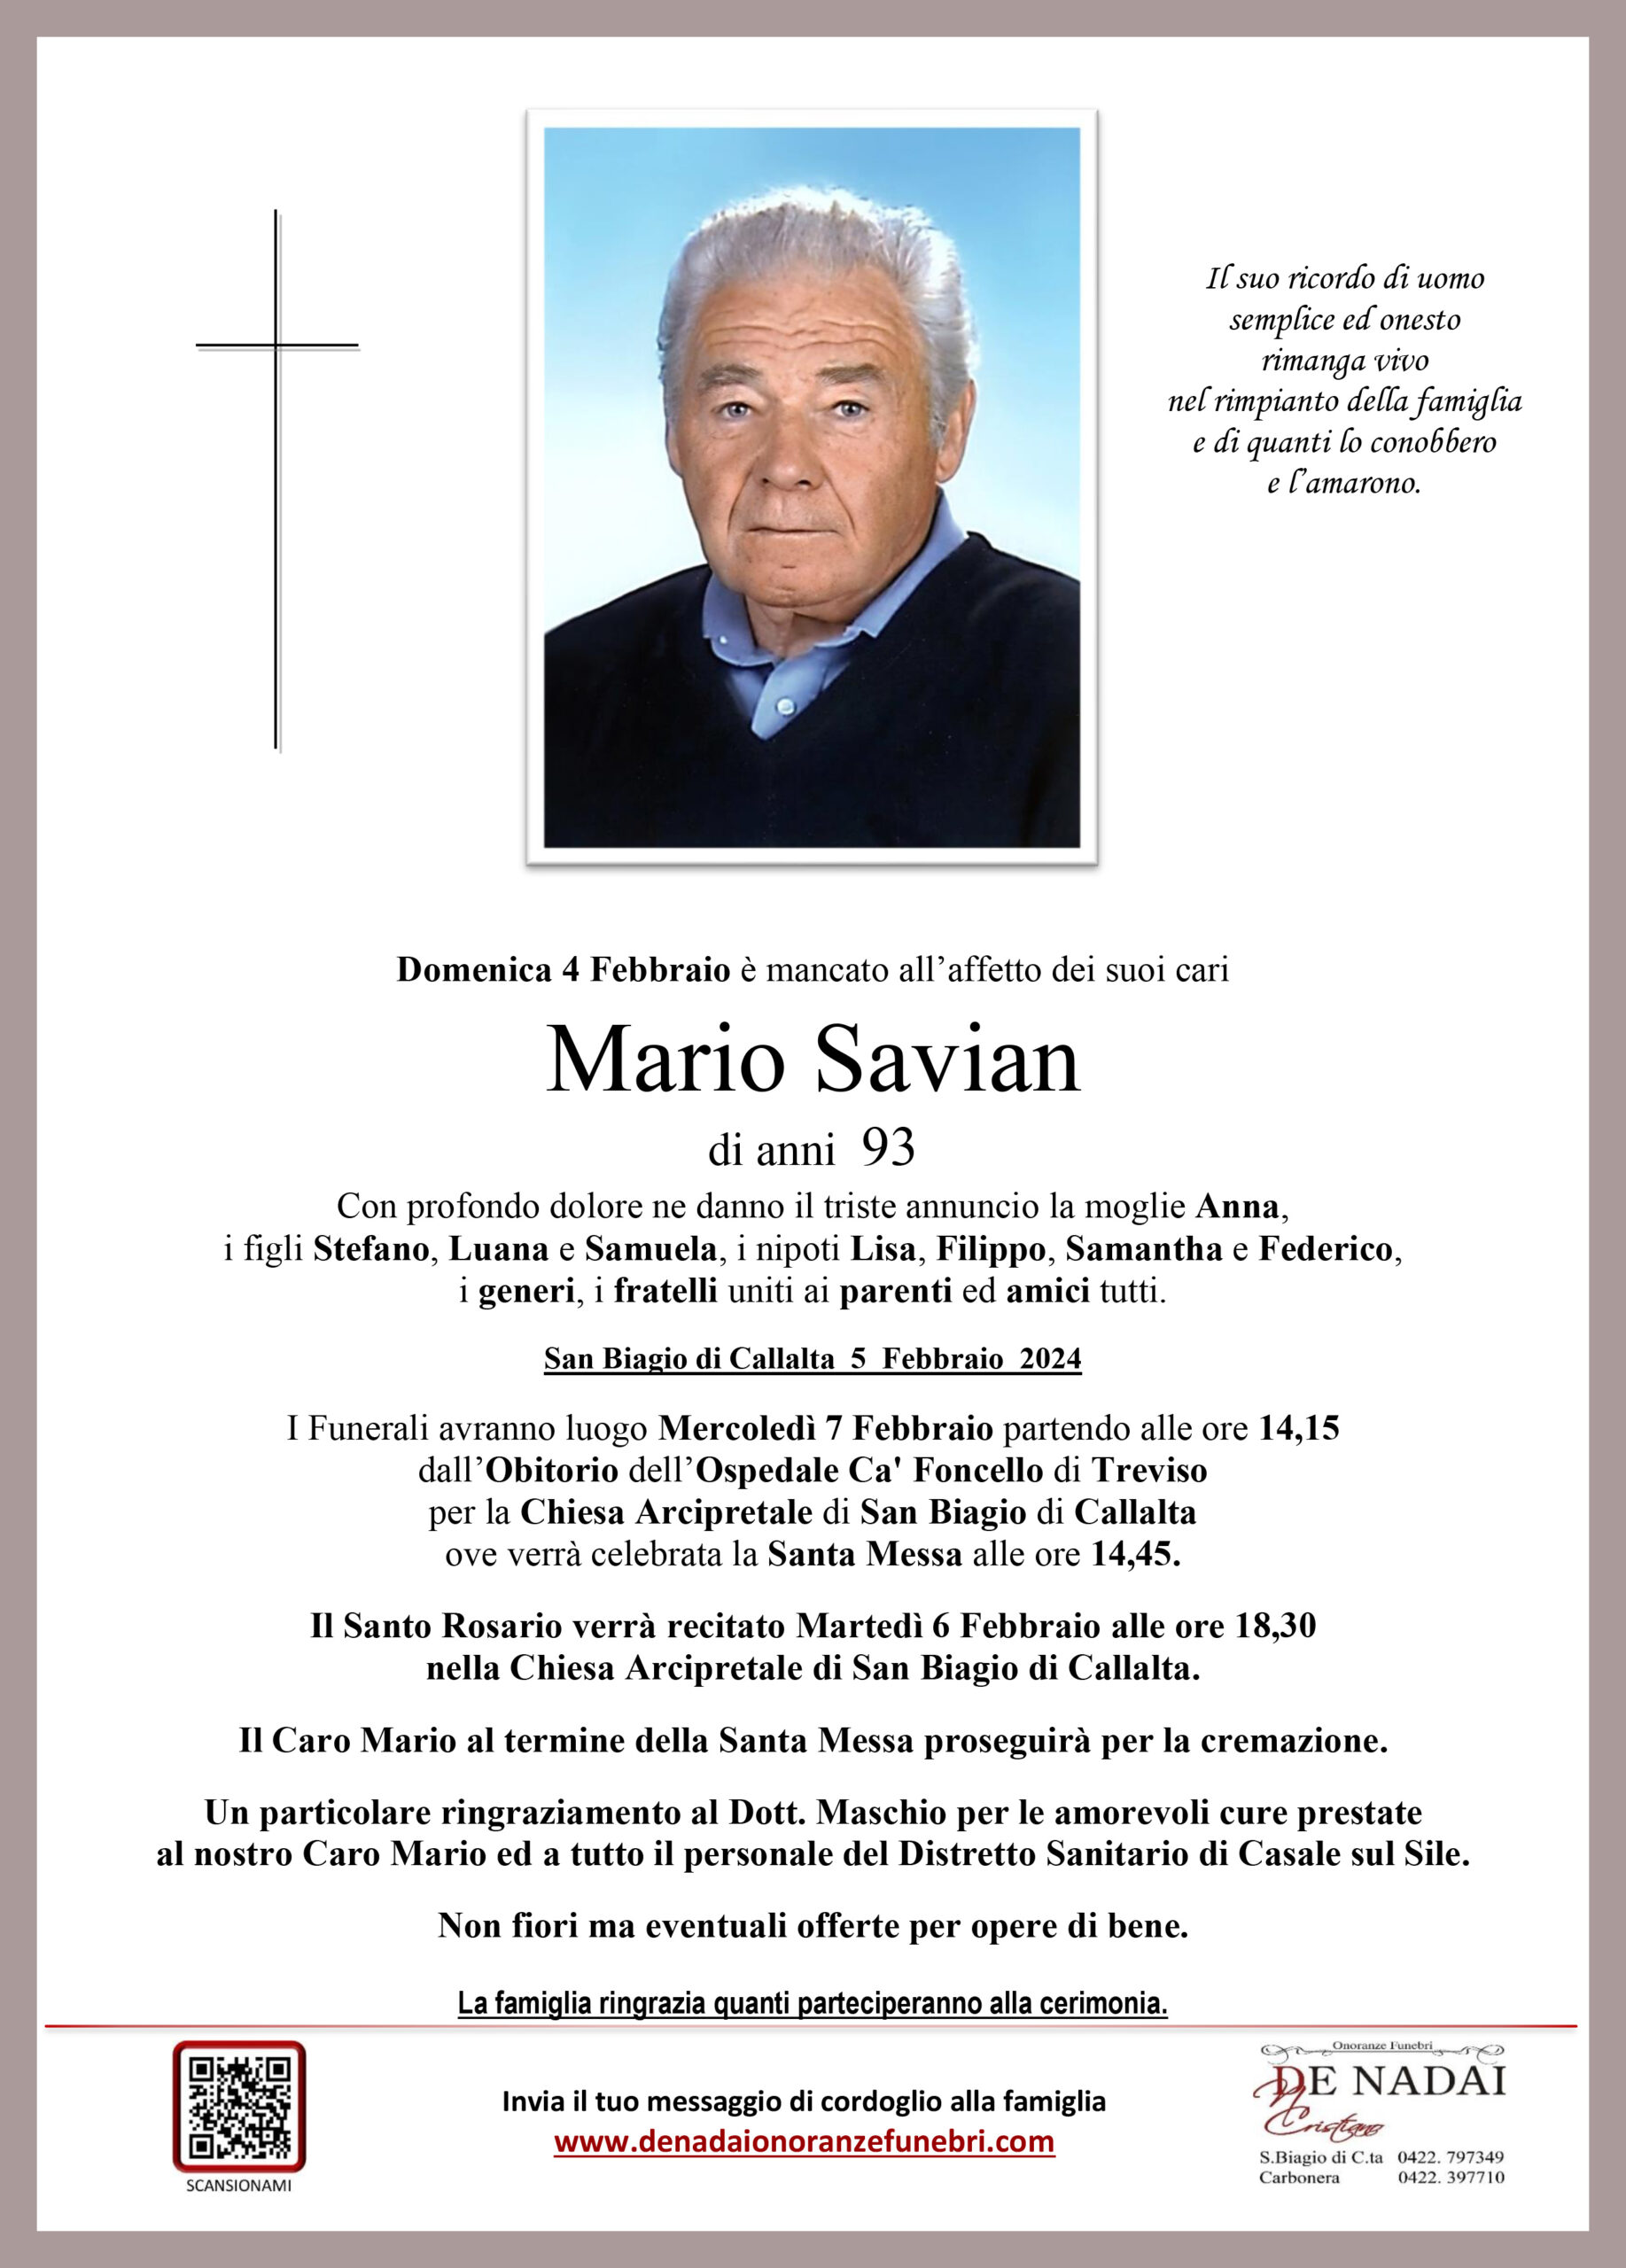 Savian Mario